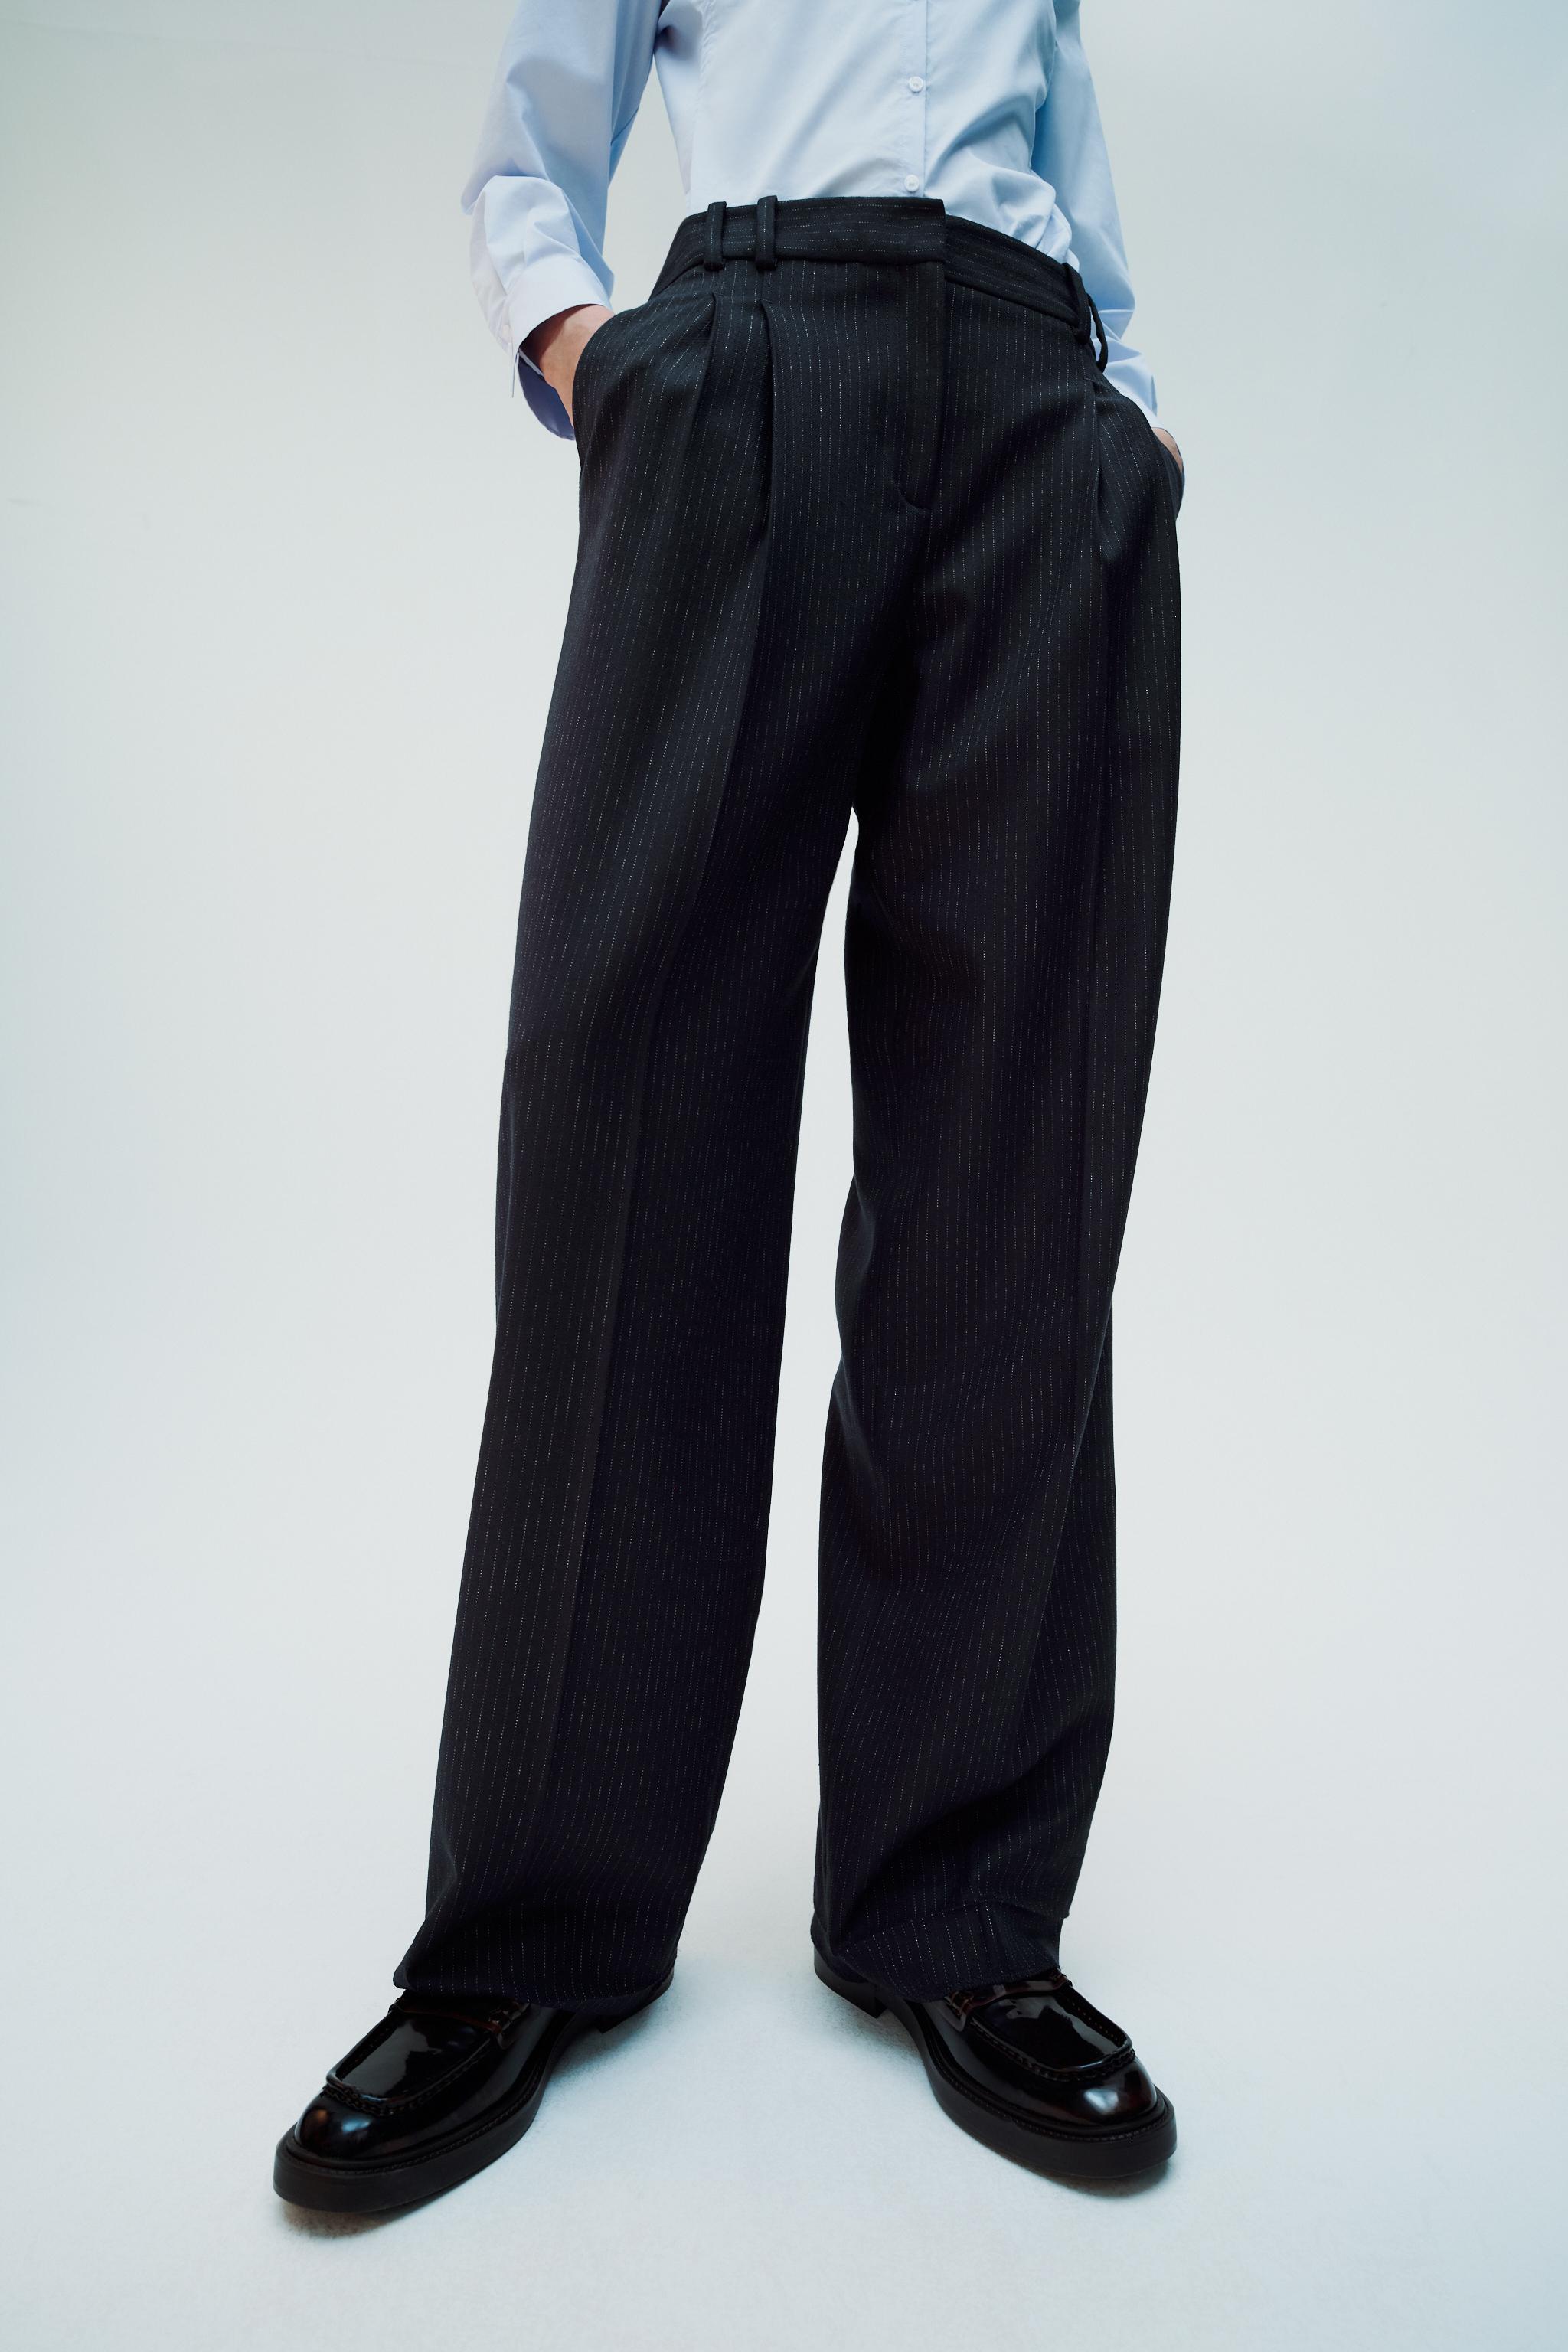 Zara Mens Solid Navy Blue Straight Leg Pants w Belt Loops Cotton Blend Size  30